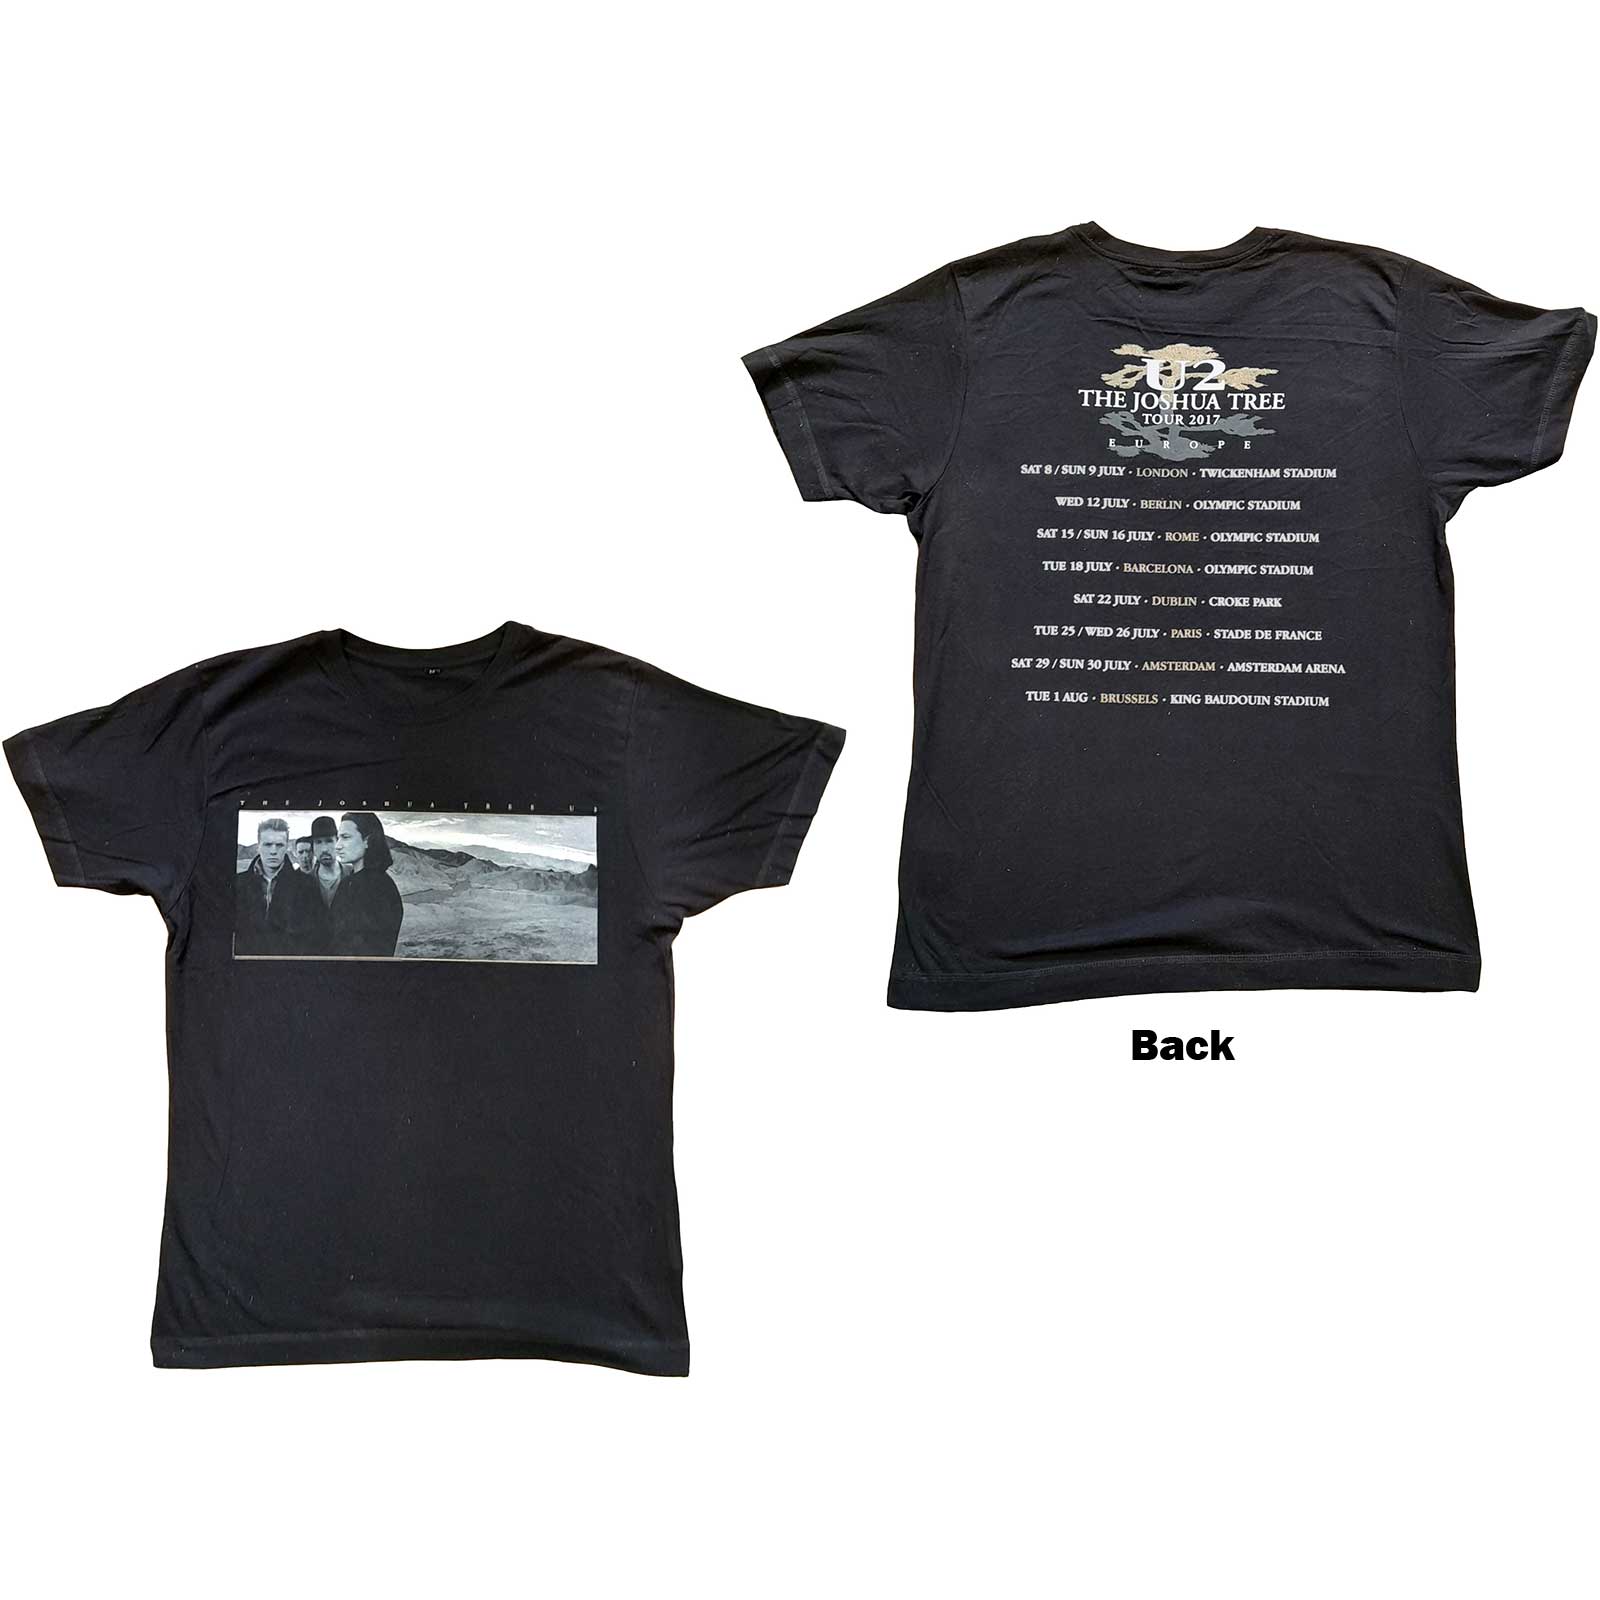 U2 T-Shirt - Joshua Tree With Back Print (Unisex) Front and back